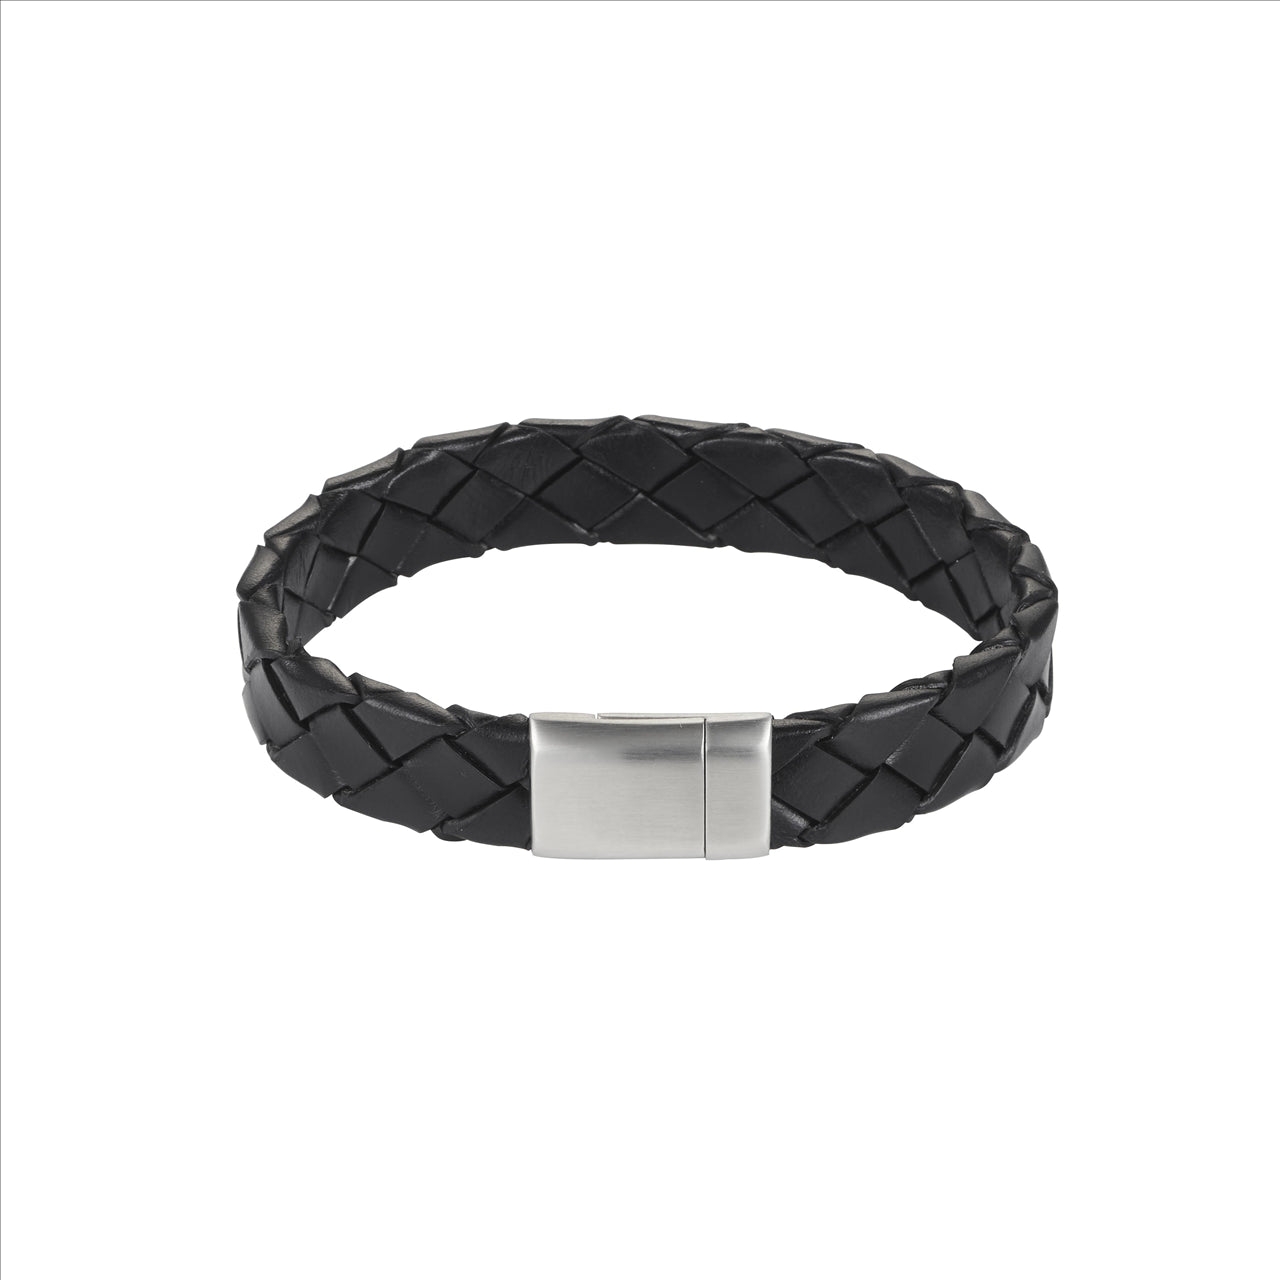 Nero Italian Leather Stainless Steel Bracelet